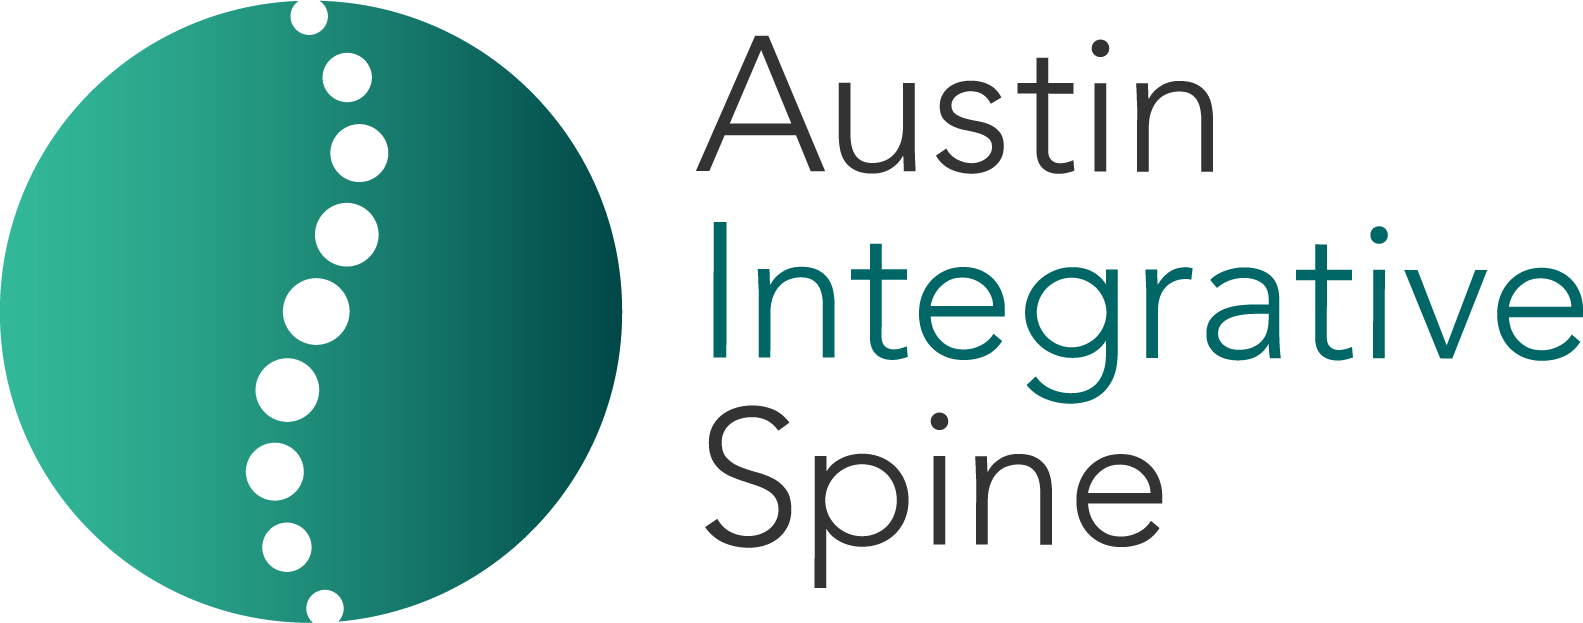 Austin Integrative Spine